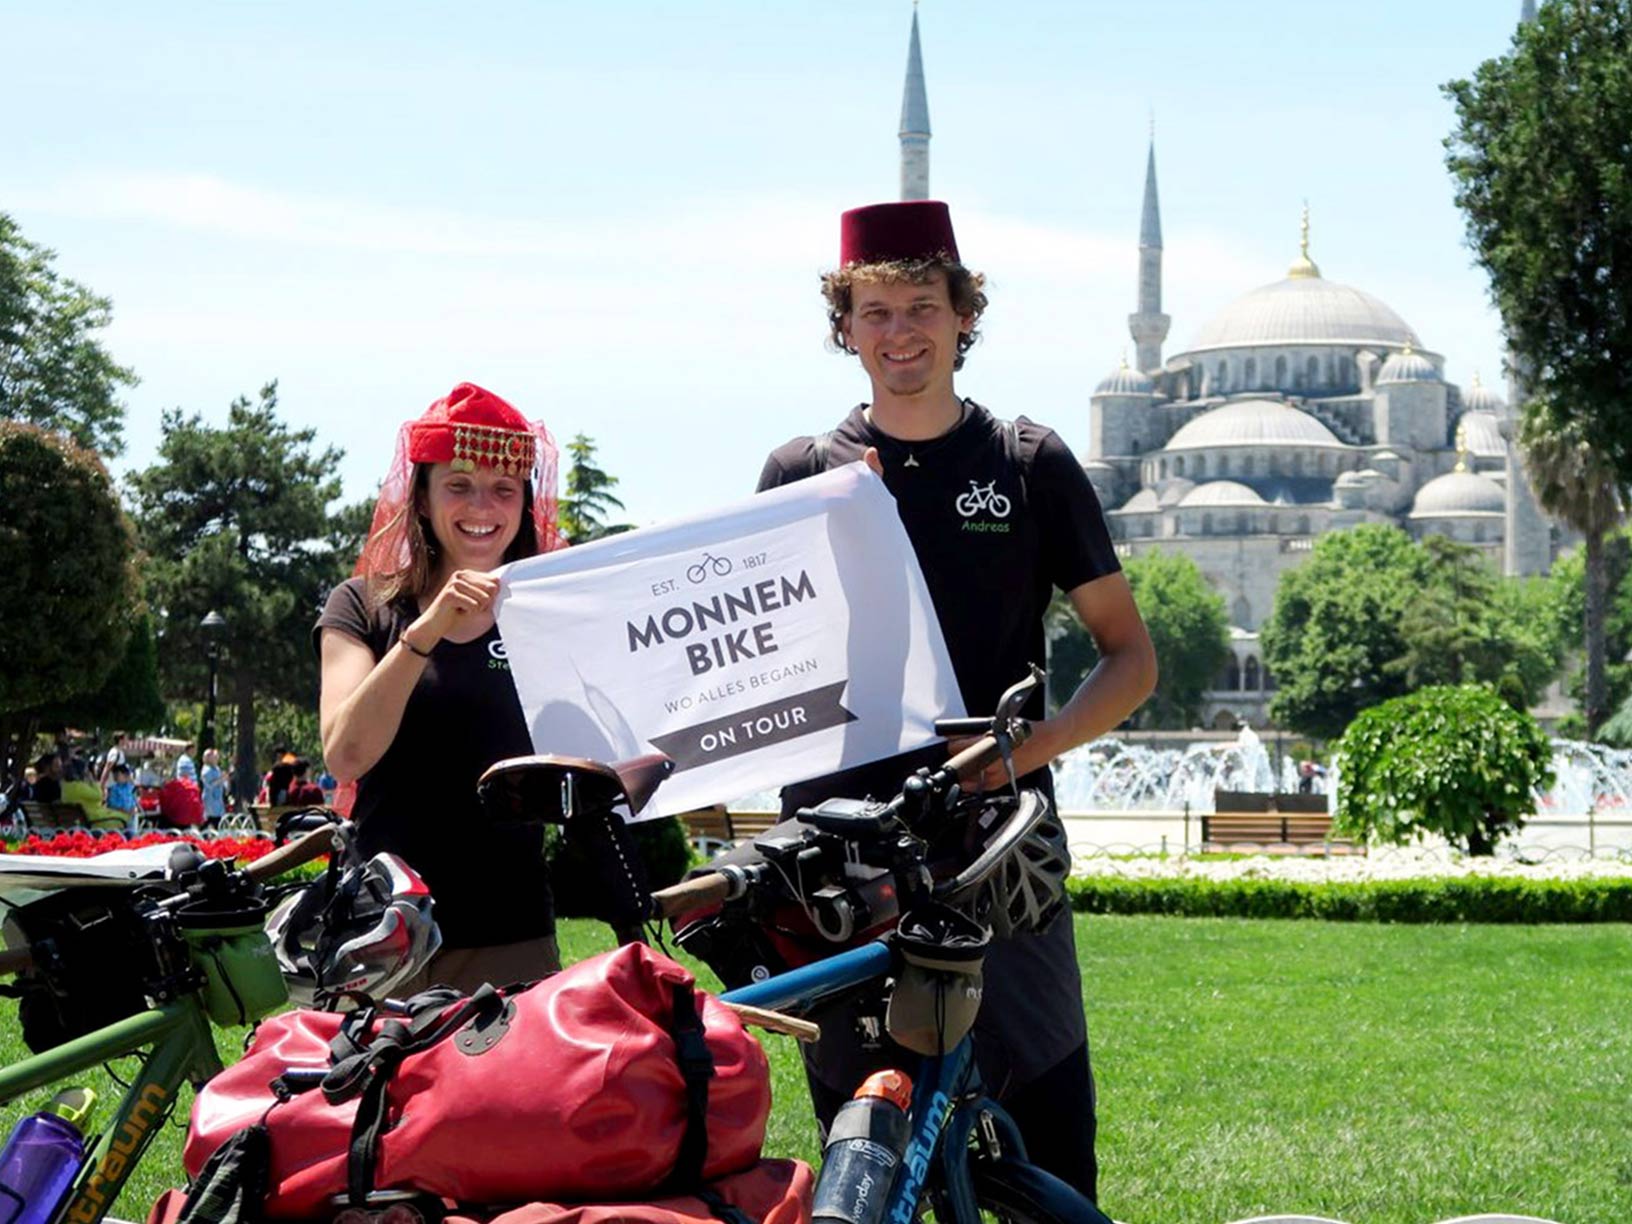 Monnem Bike on tour